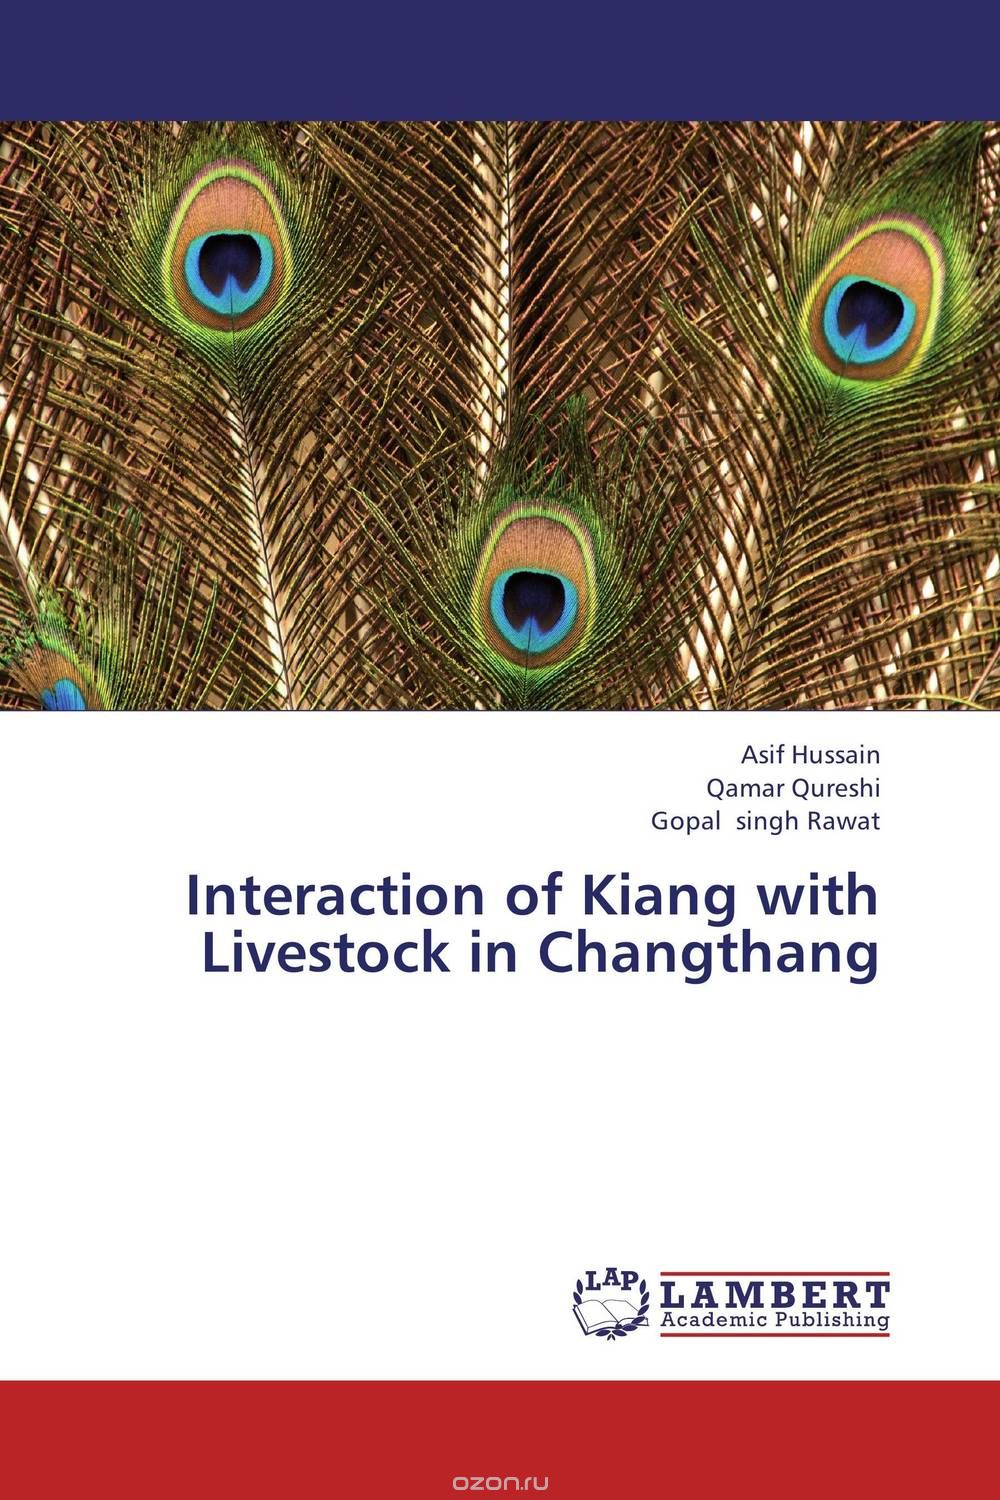 Скачать книгу "Interaction of Kiang with Livestock in Changthang"